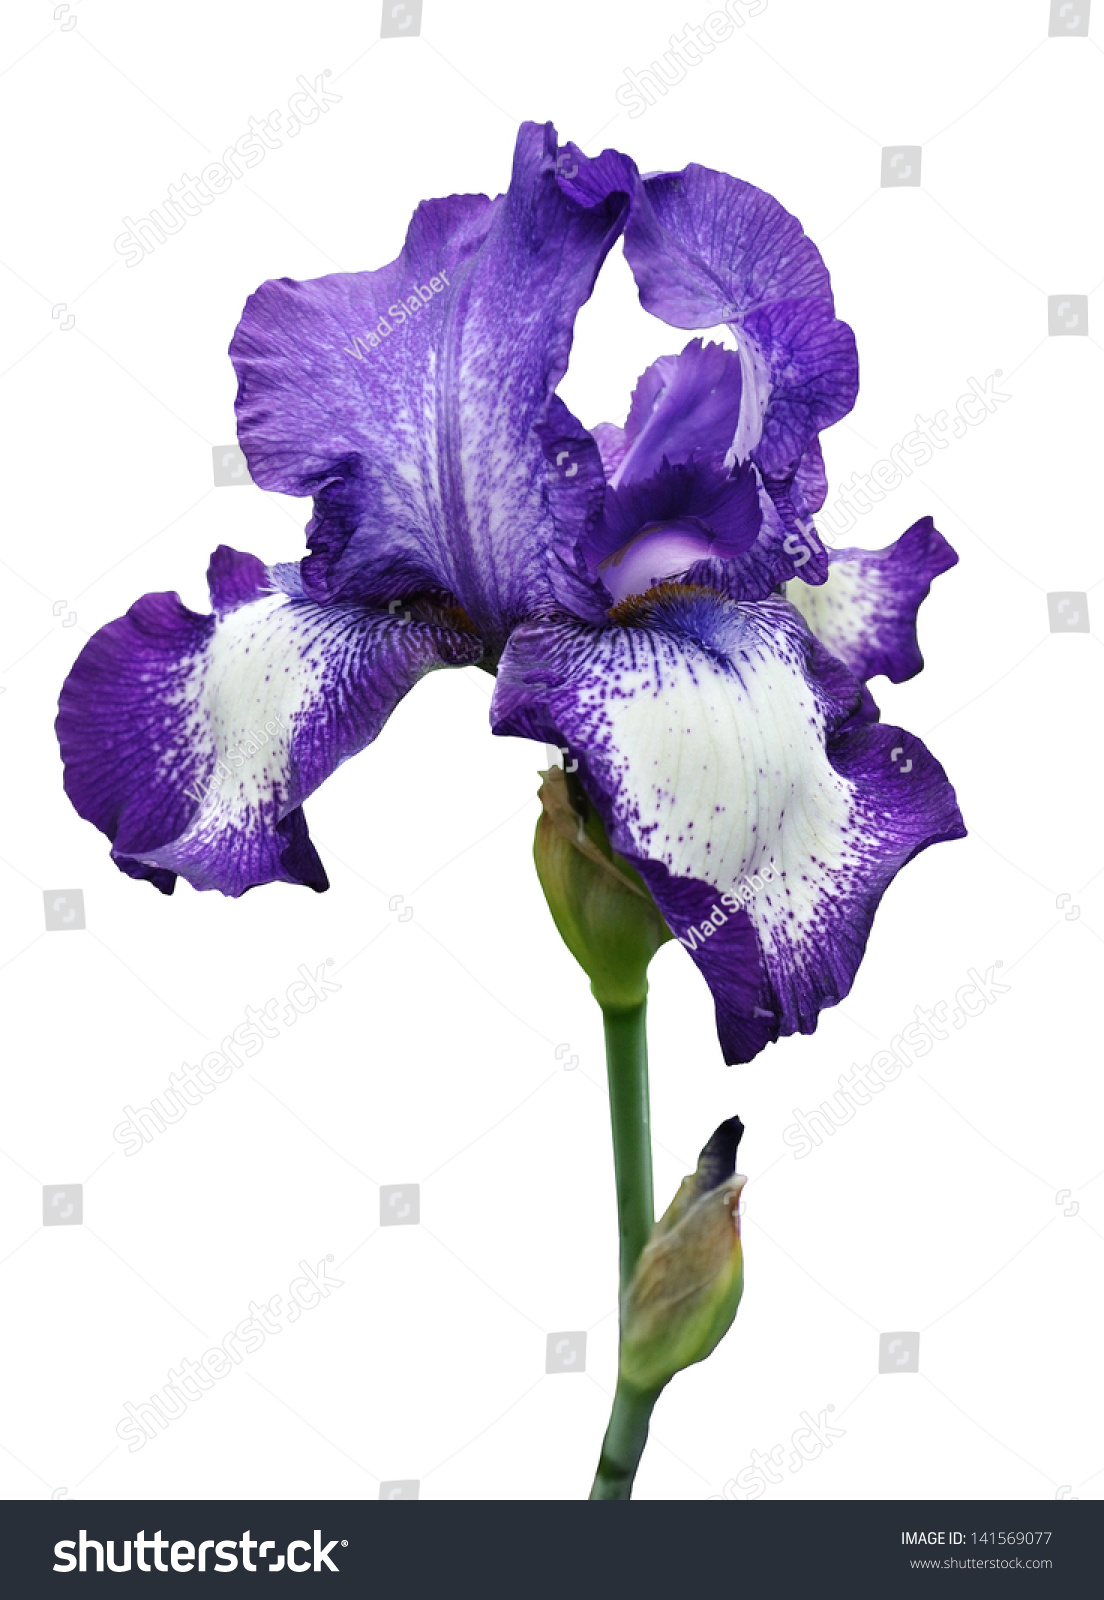 violet iris flower isolated on white background #141569077